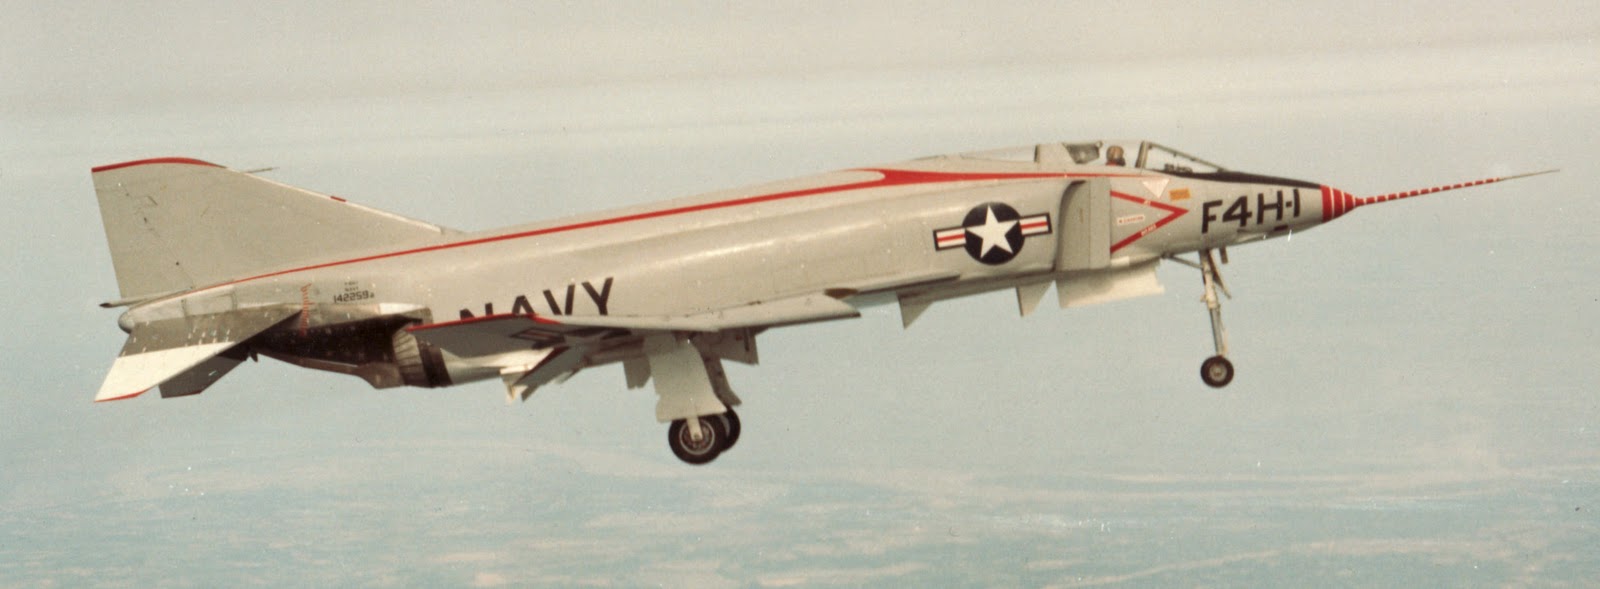 McDonnell-YF4H-1-Phantom-II-Bu.-No.-142259-prototype.jpg